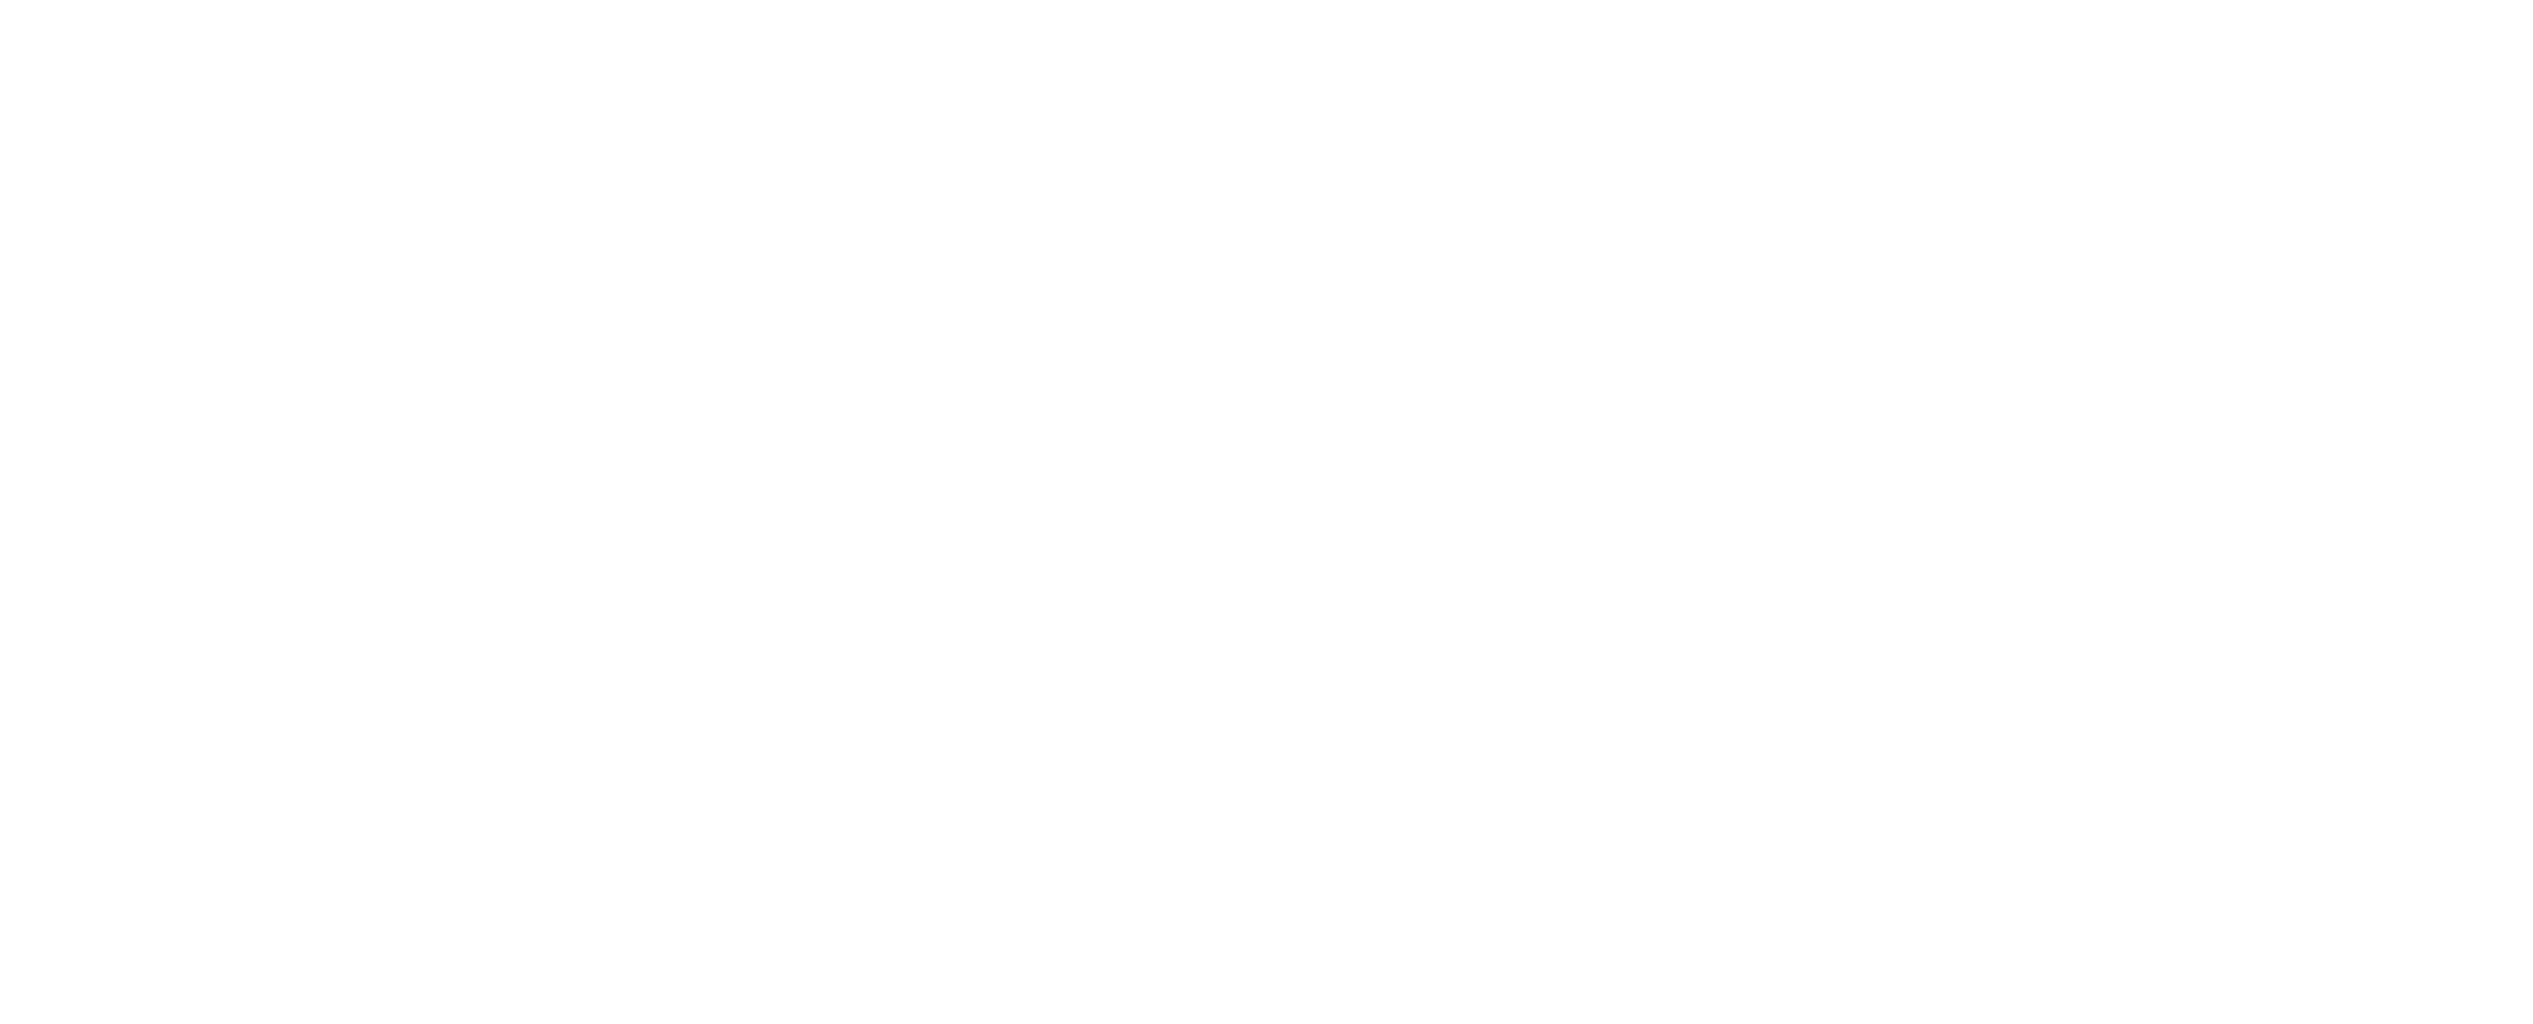 Godot Engine logo (monochrome for dark backgrounds)